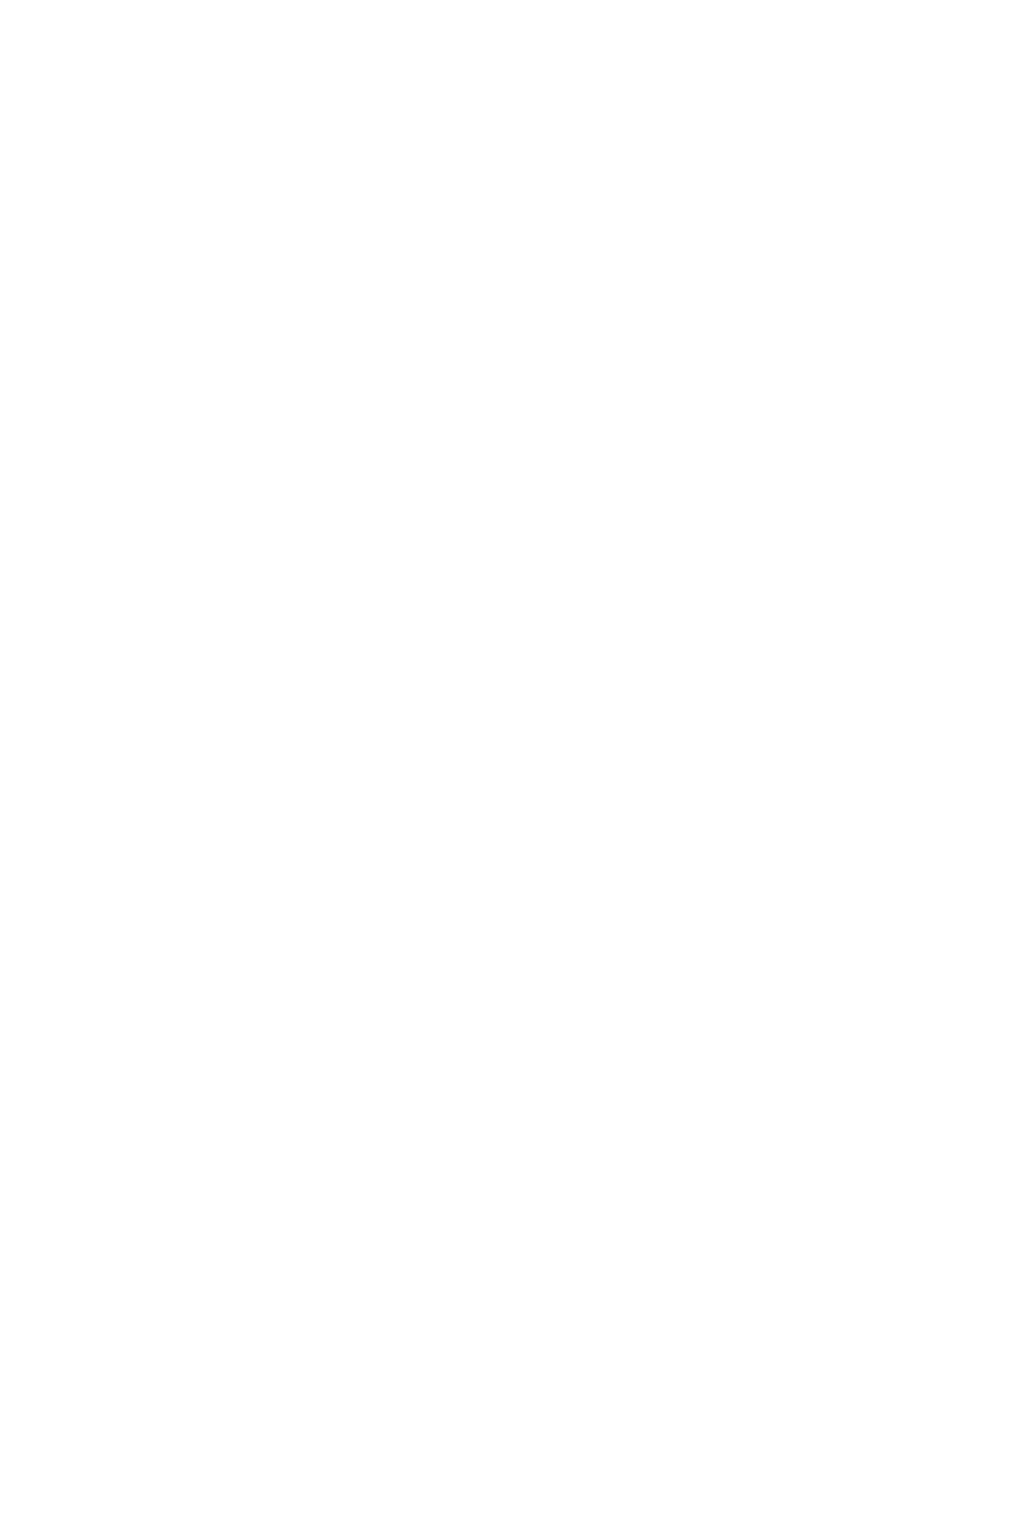 MilwaukeeBB logo